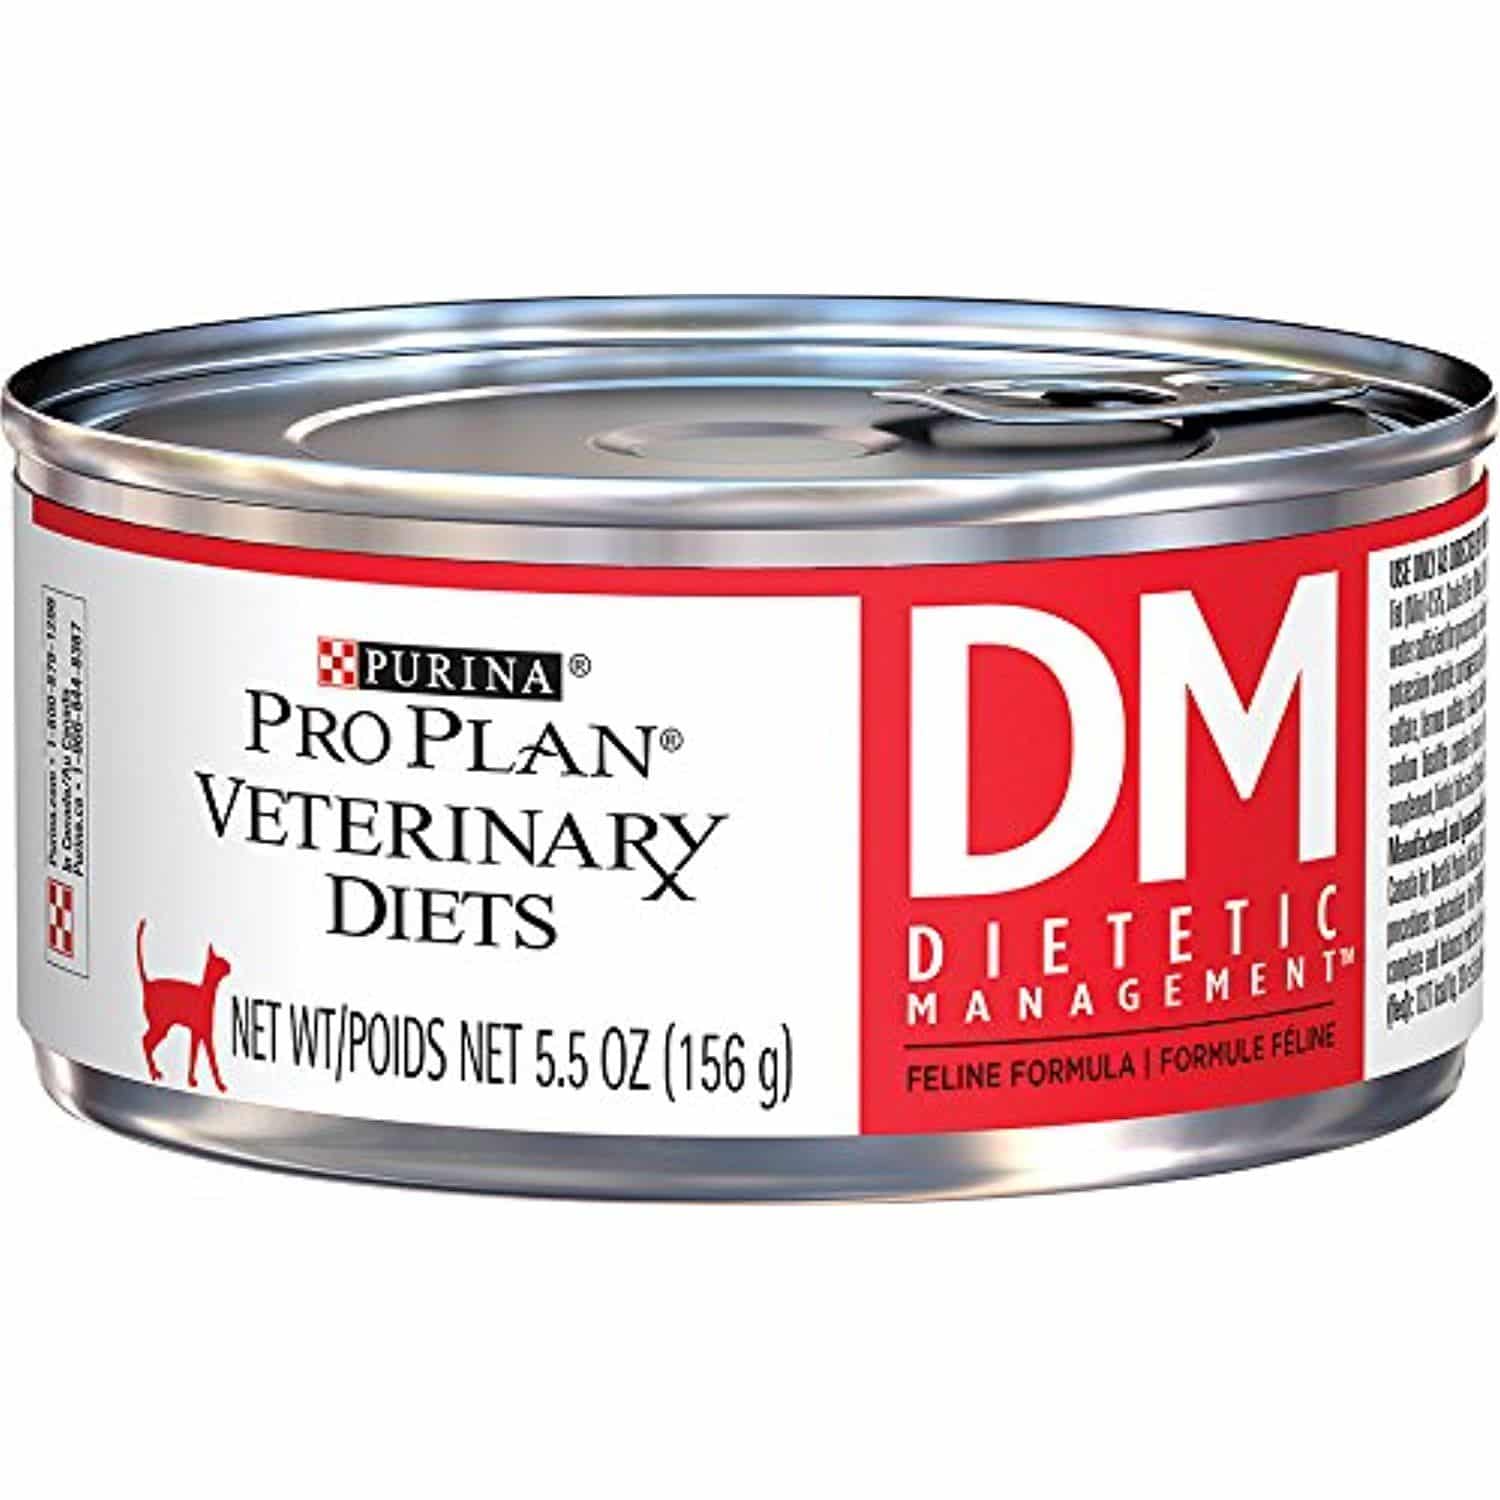 Purina Veterinary Diets Feline DM Dietetic Management Canned Cat Food ...